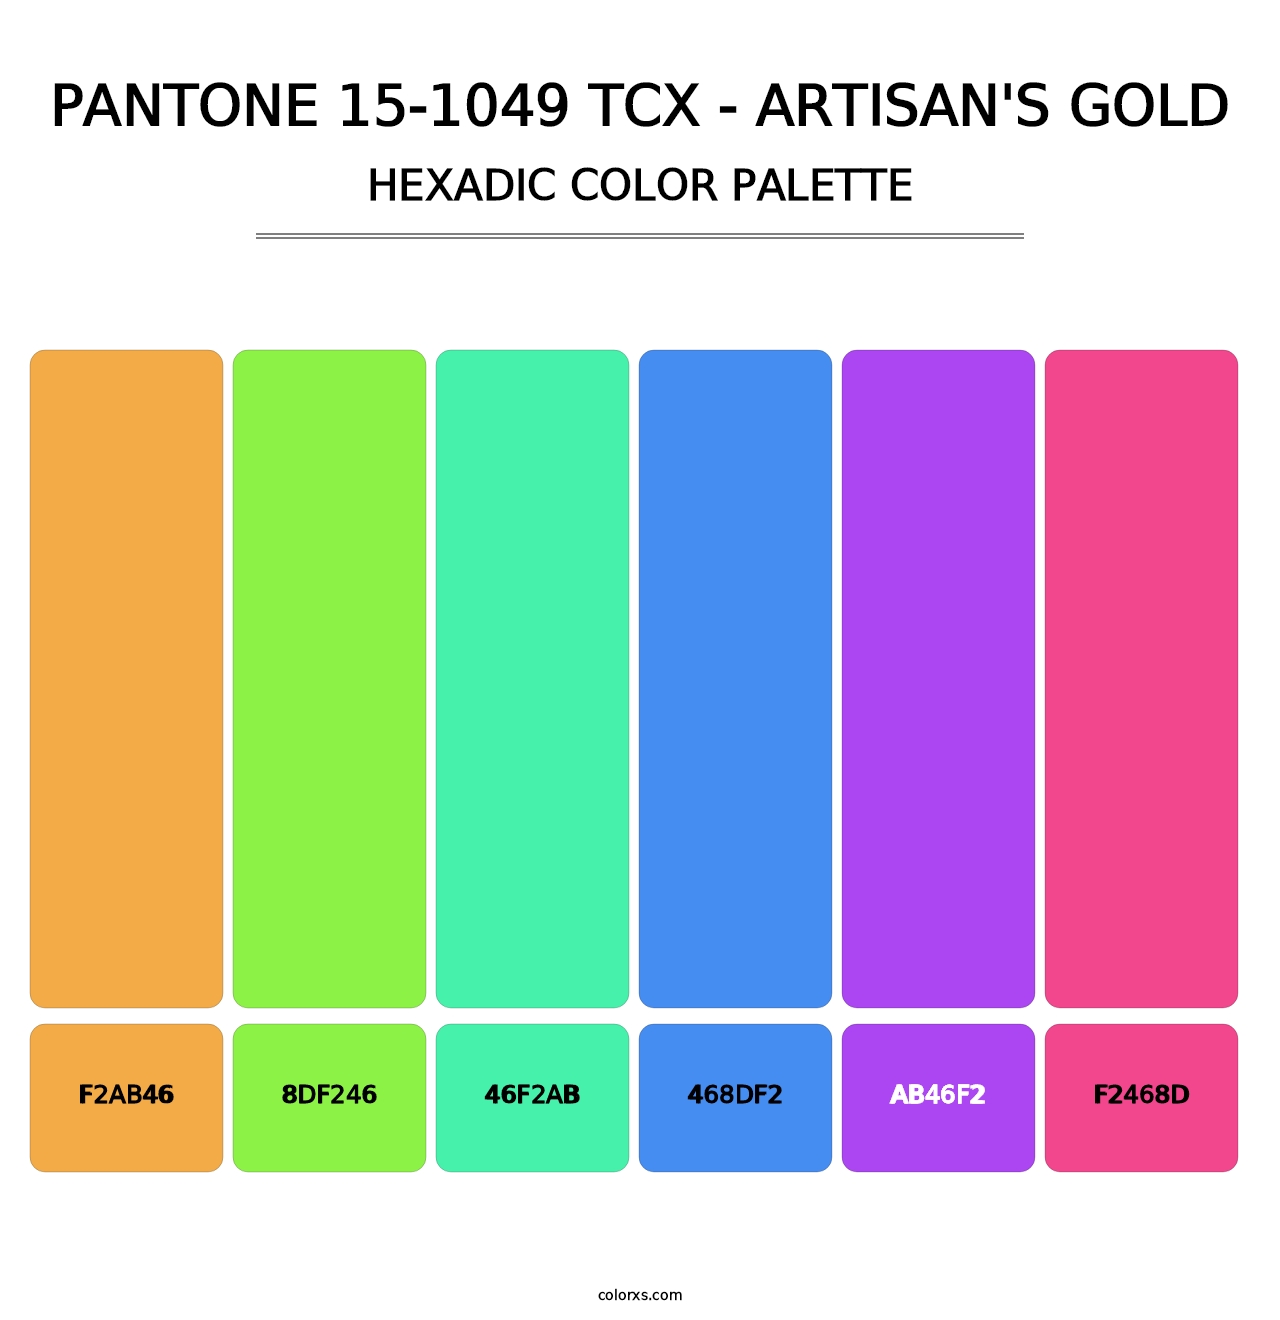 PANTONE 15-1049 TCX - Artisan's Gold - Hexadic Color Palette